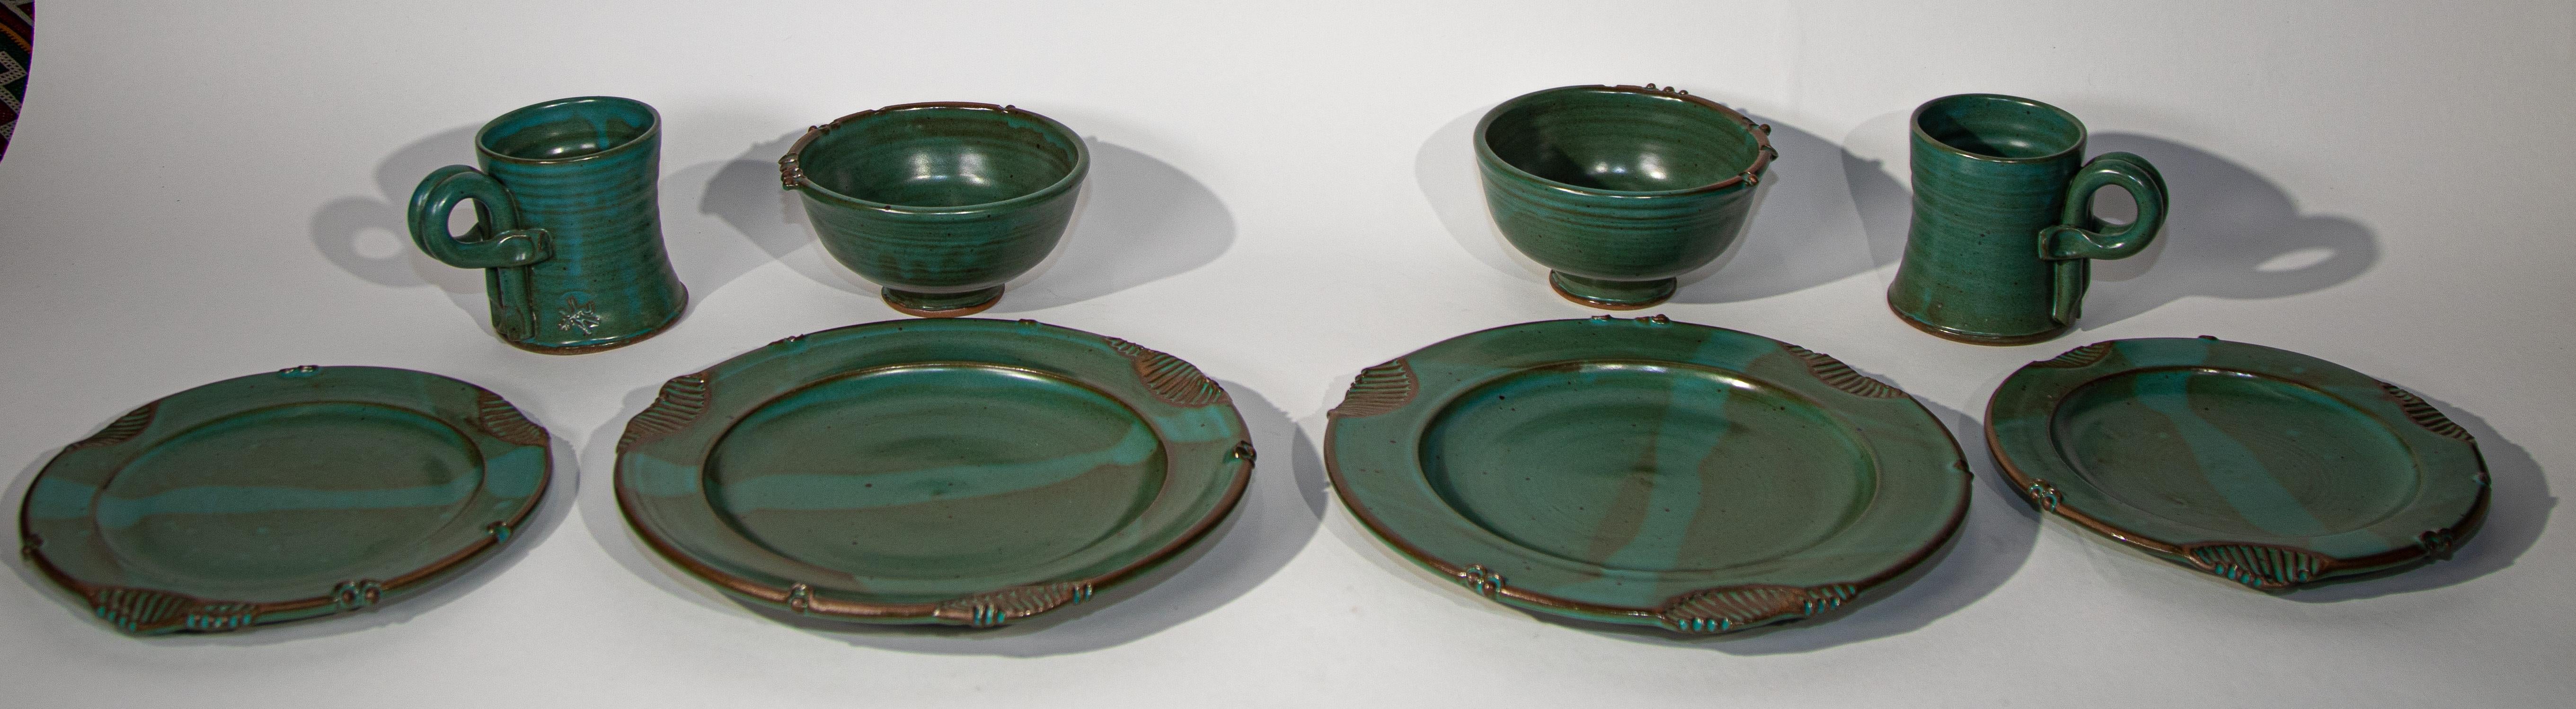 green stoneware dishes